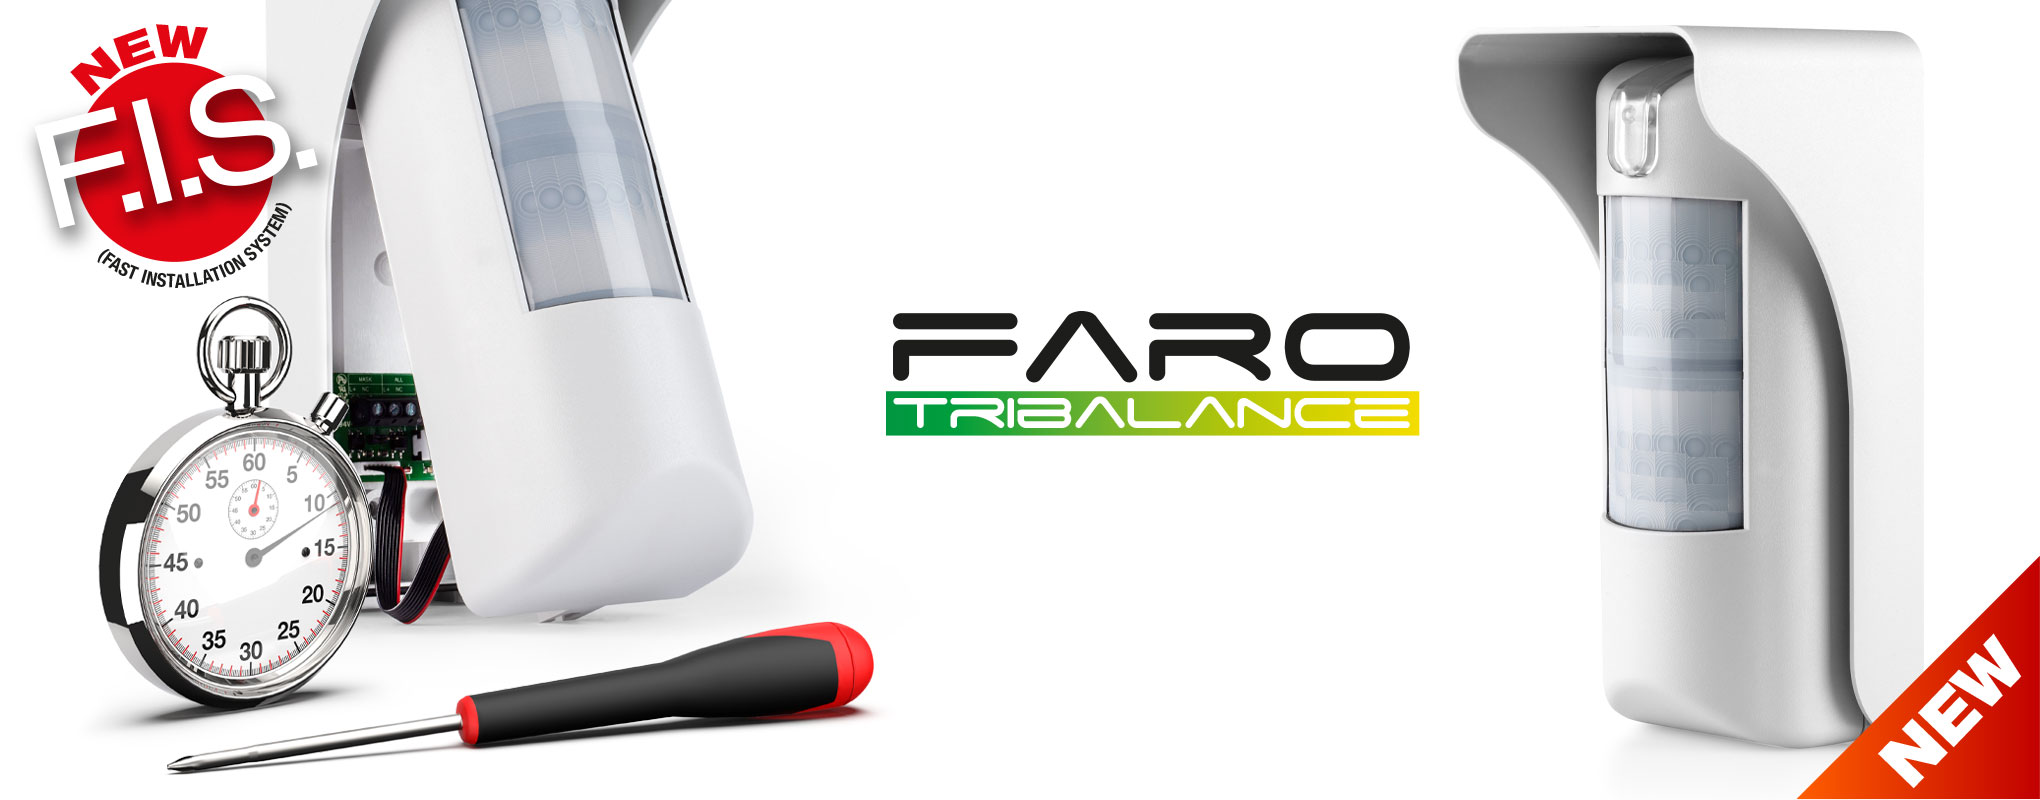 Faro Tribalance | TRIPLE TECHNOLOGY VOLUMETRIC DETECTOR FOR OUTDOOR APPLICATION